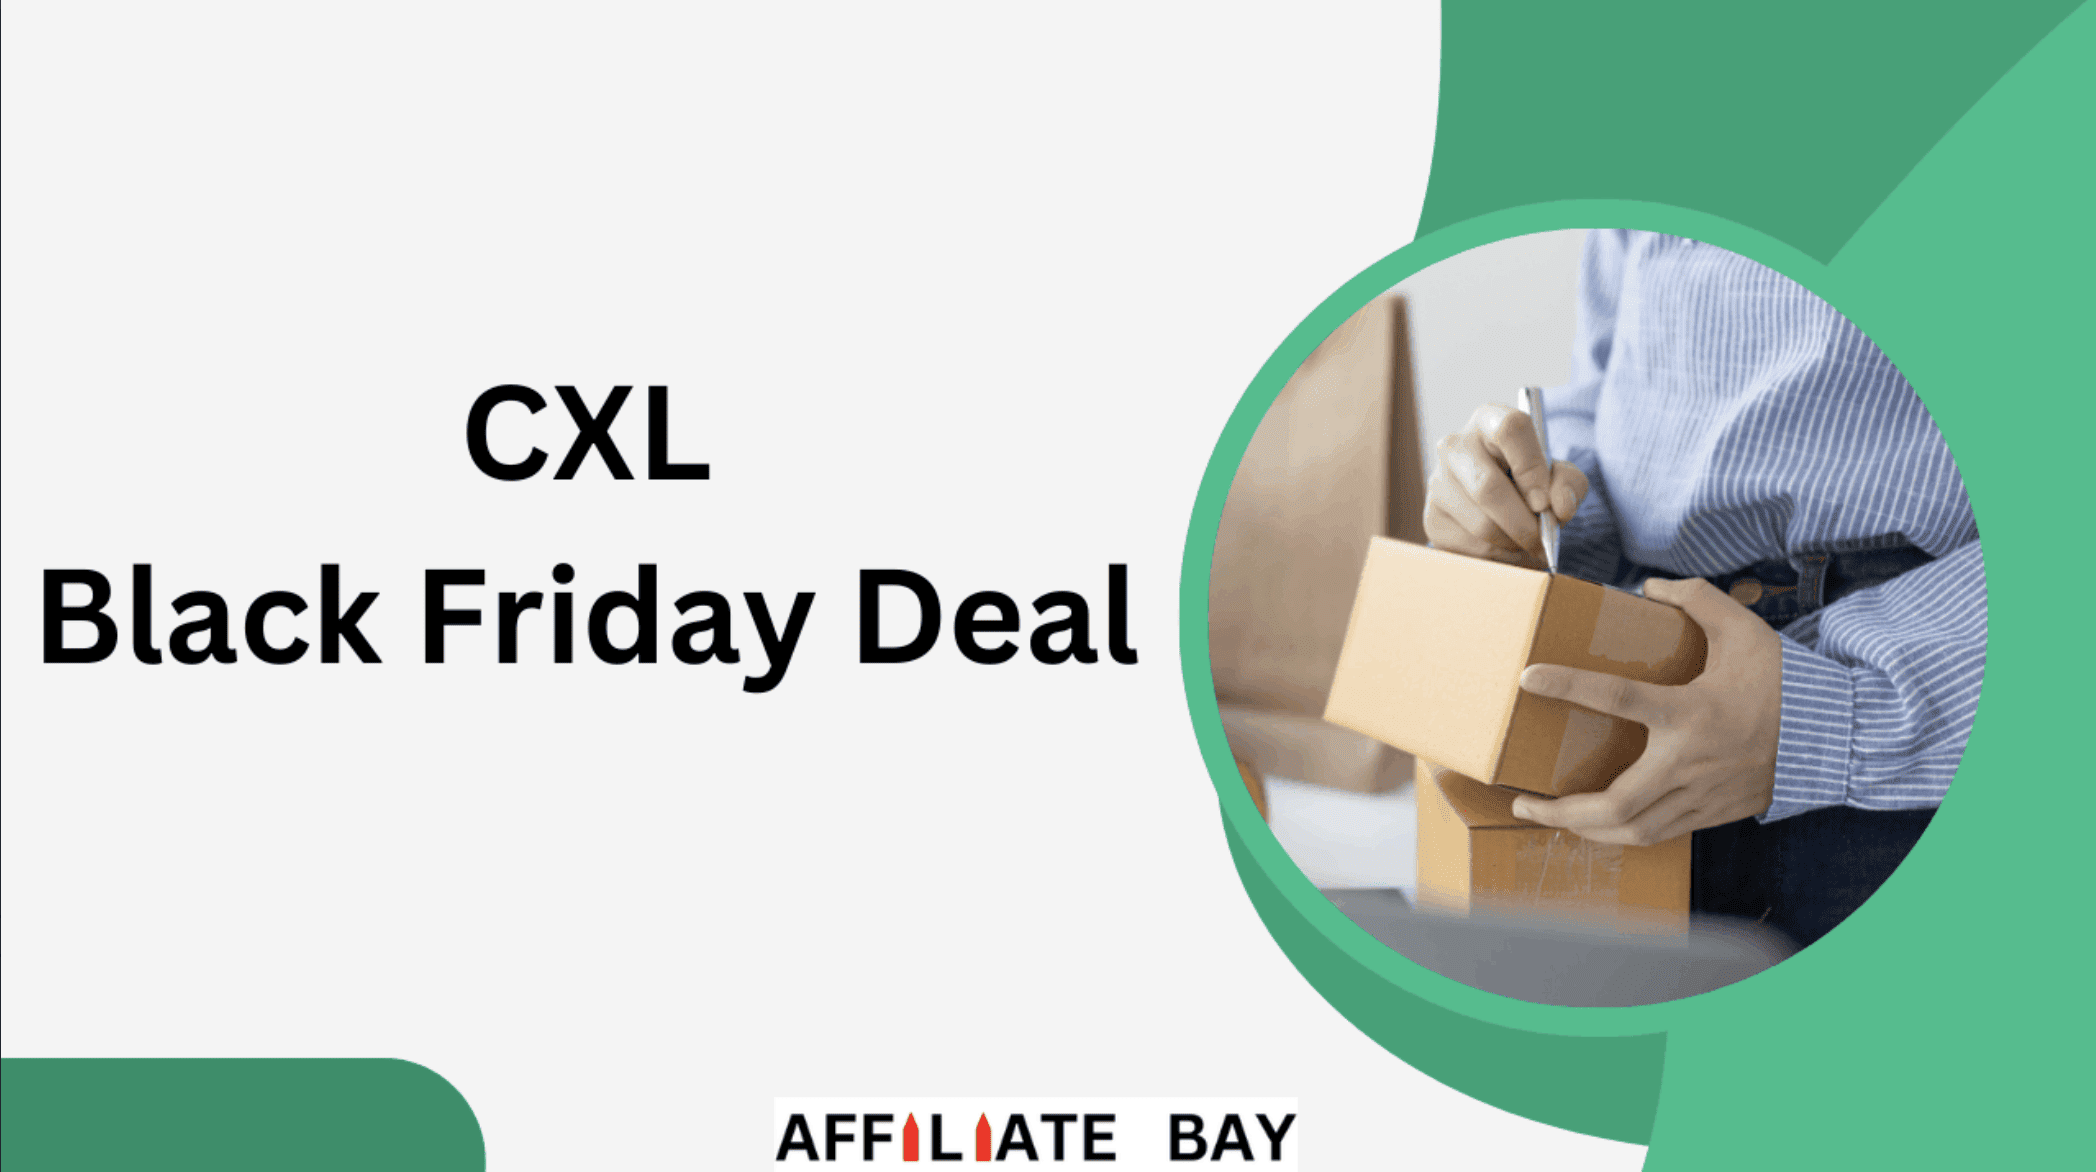 CXL Black Friday Deal